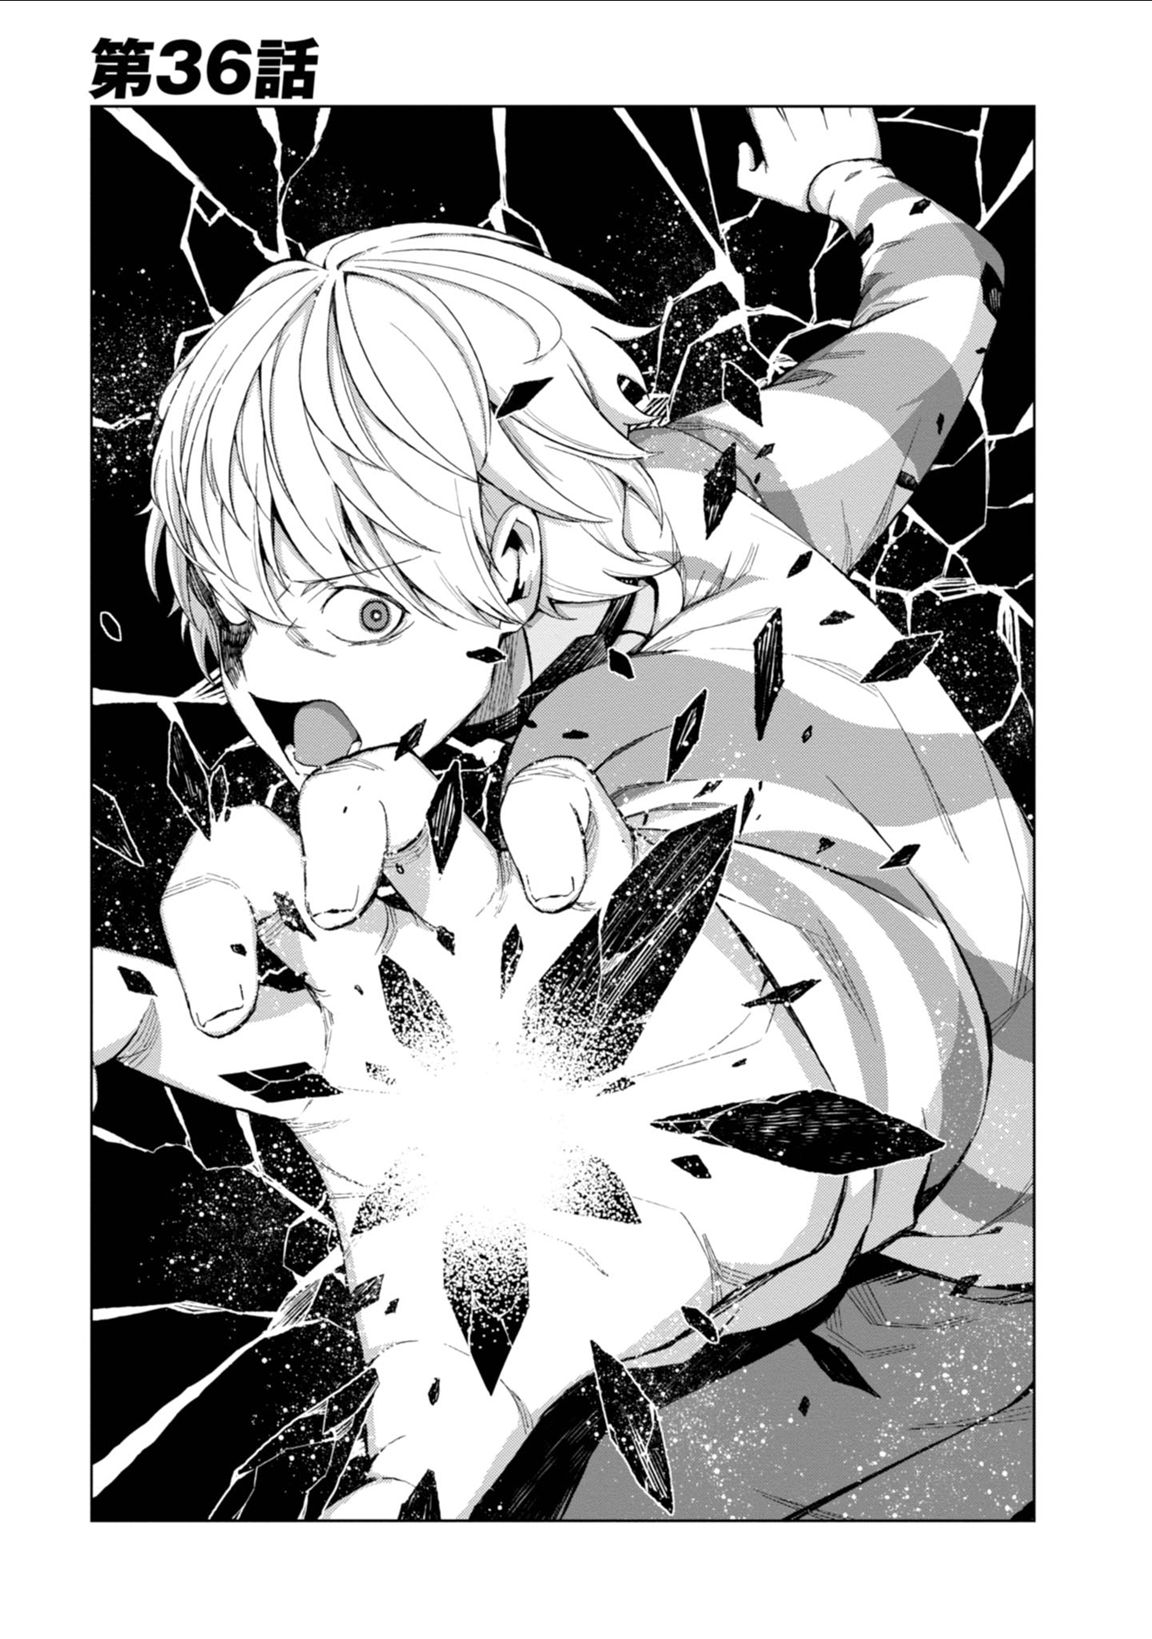 Le manga Toaru Kagaku no Accelerator adapté en anime - Adala News